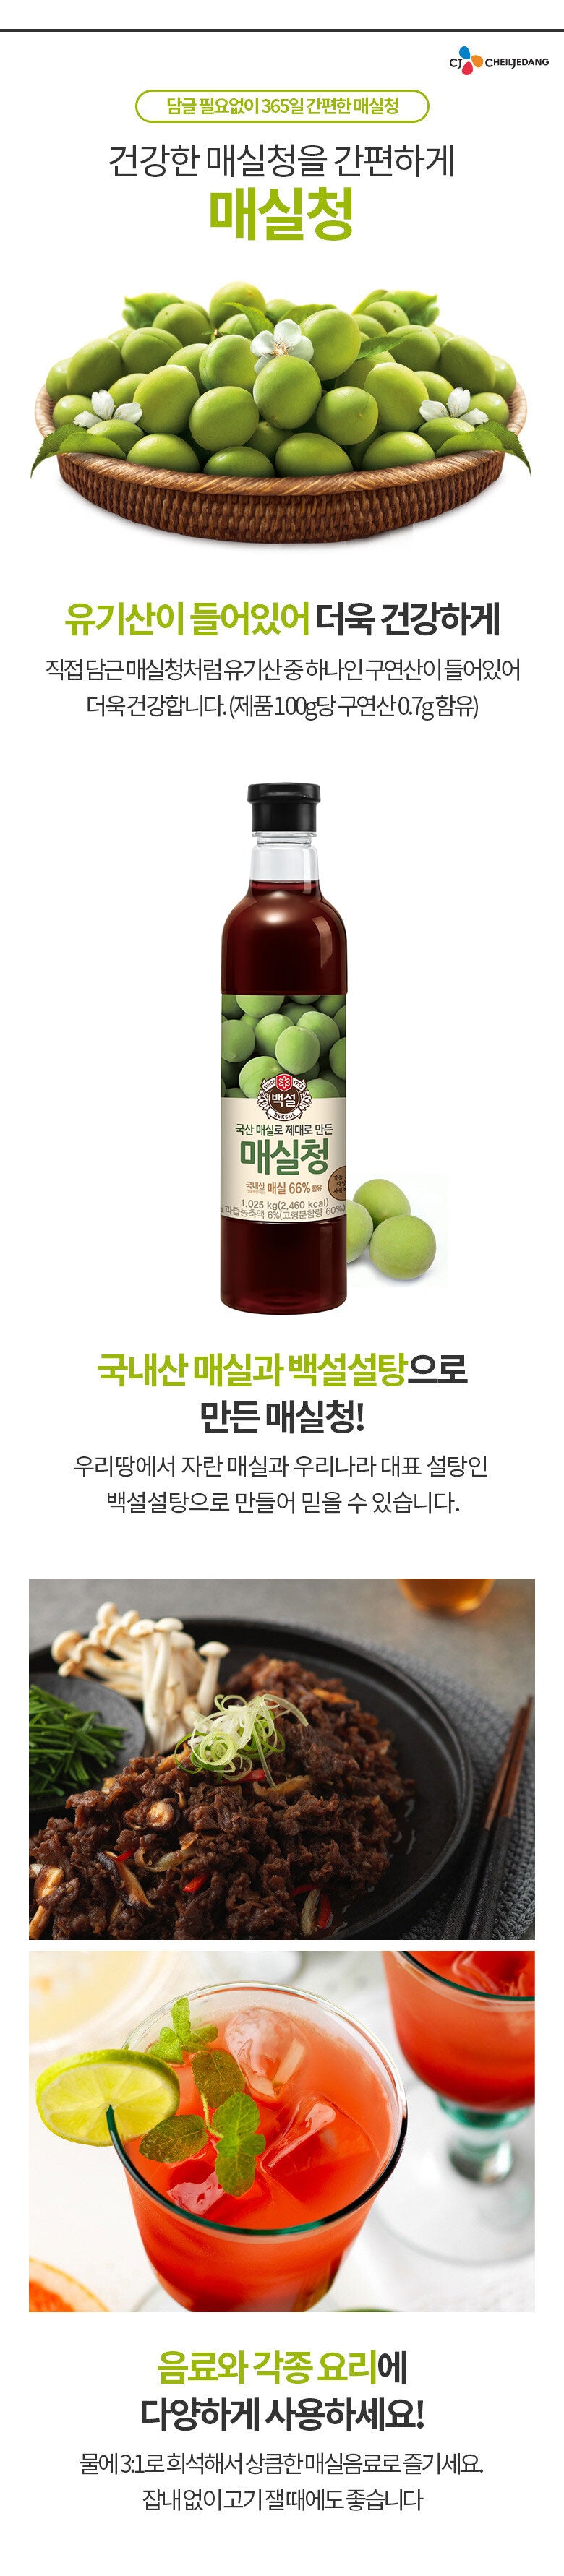 CJ Beksul Korean All Purpose Plum Extract Syrup CJ 백설 매실청